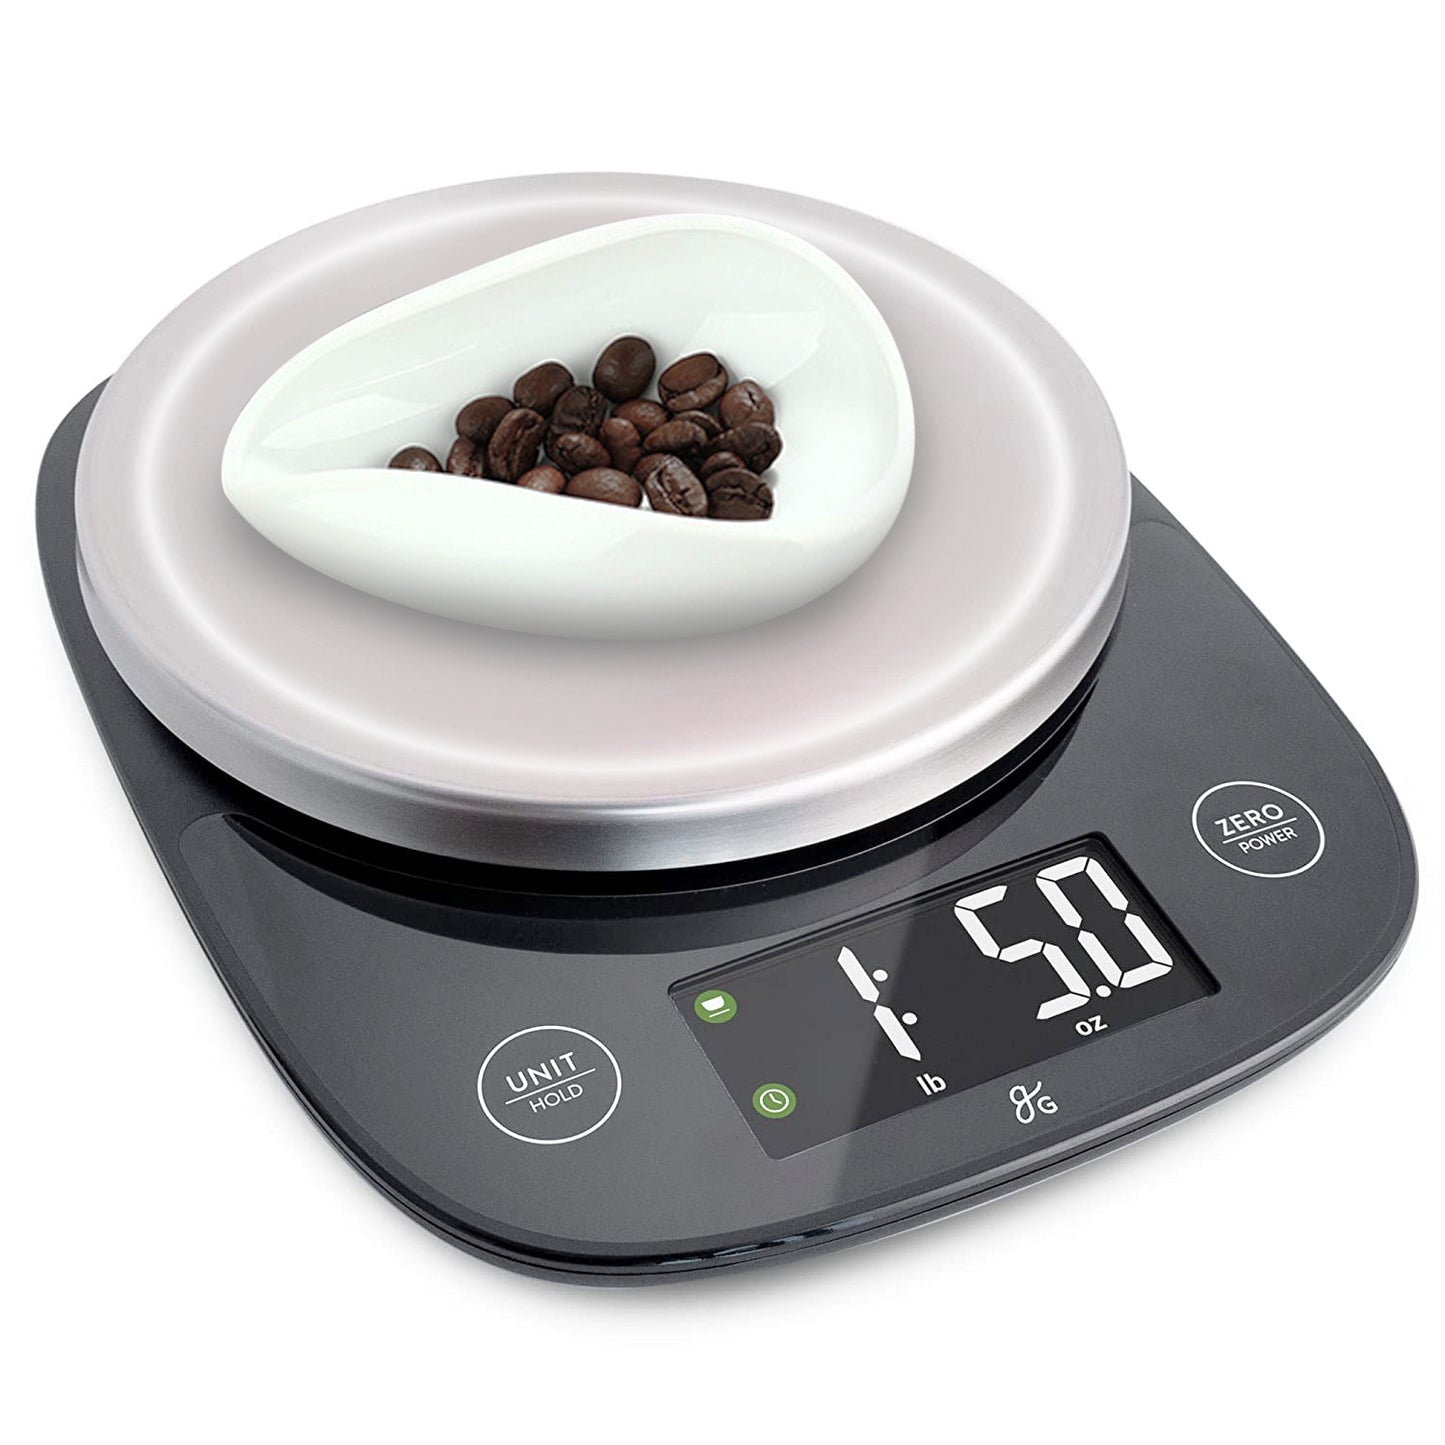 CAFEGENS Coffee Bean Dosing Cup Set